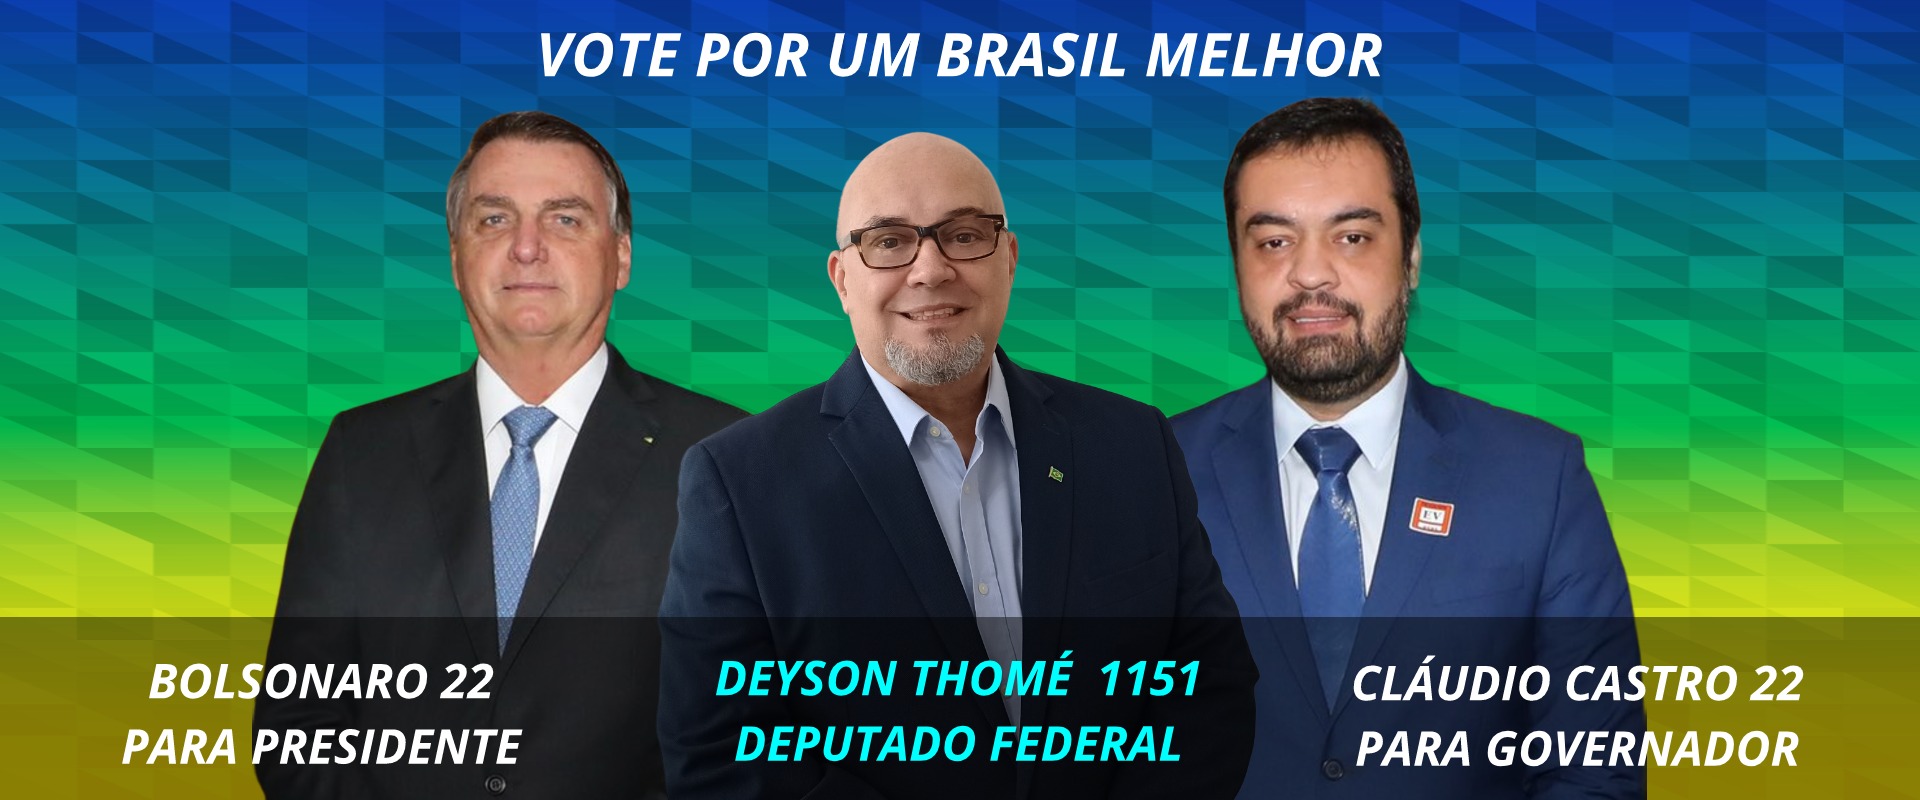 Bolsonaro - Cláudio Castro - Deyson Thomé Deputado Federa 1151